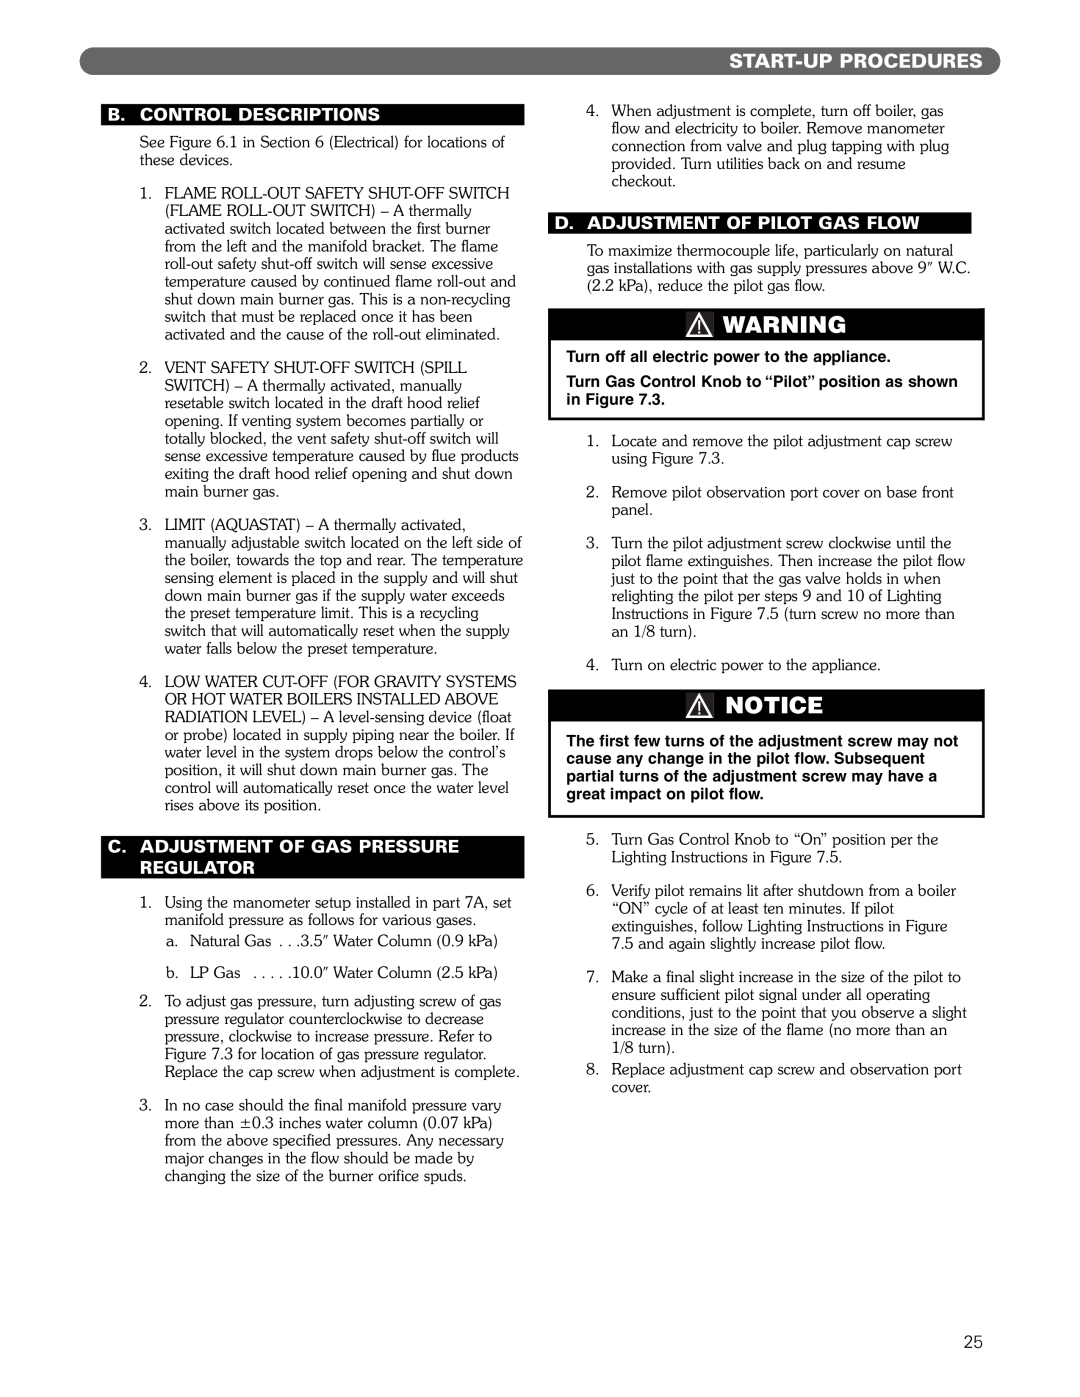 PB Heat MI/MIH series manual Start-Upprocedures, B.Control Descriptions, C.Adjustment Of Gas Pressure Regulator 